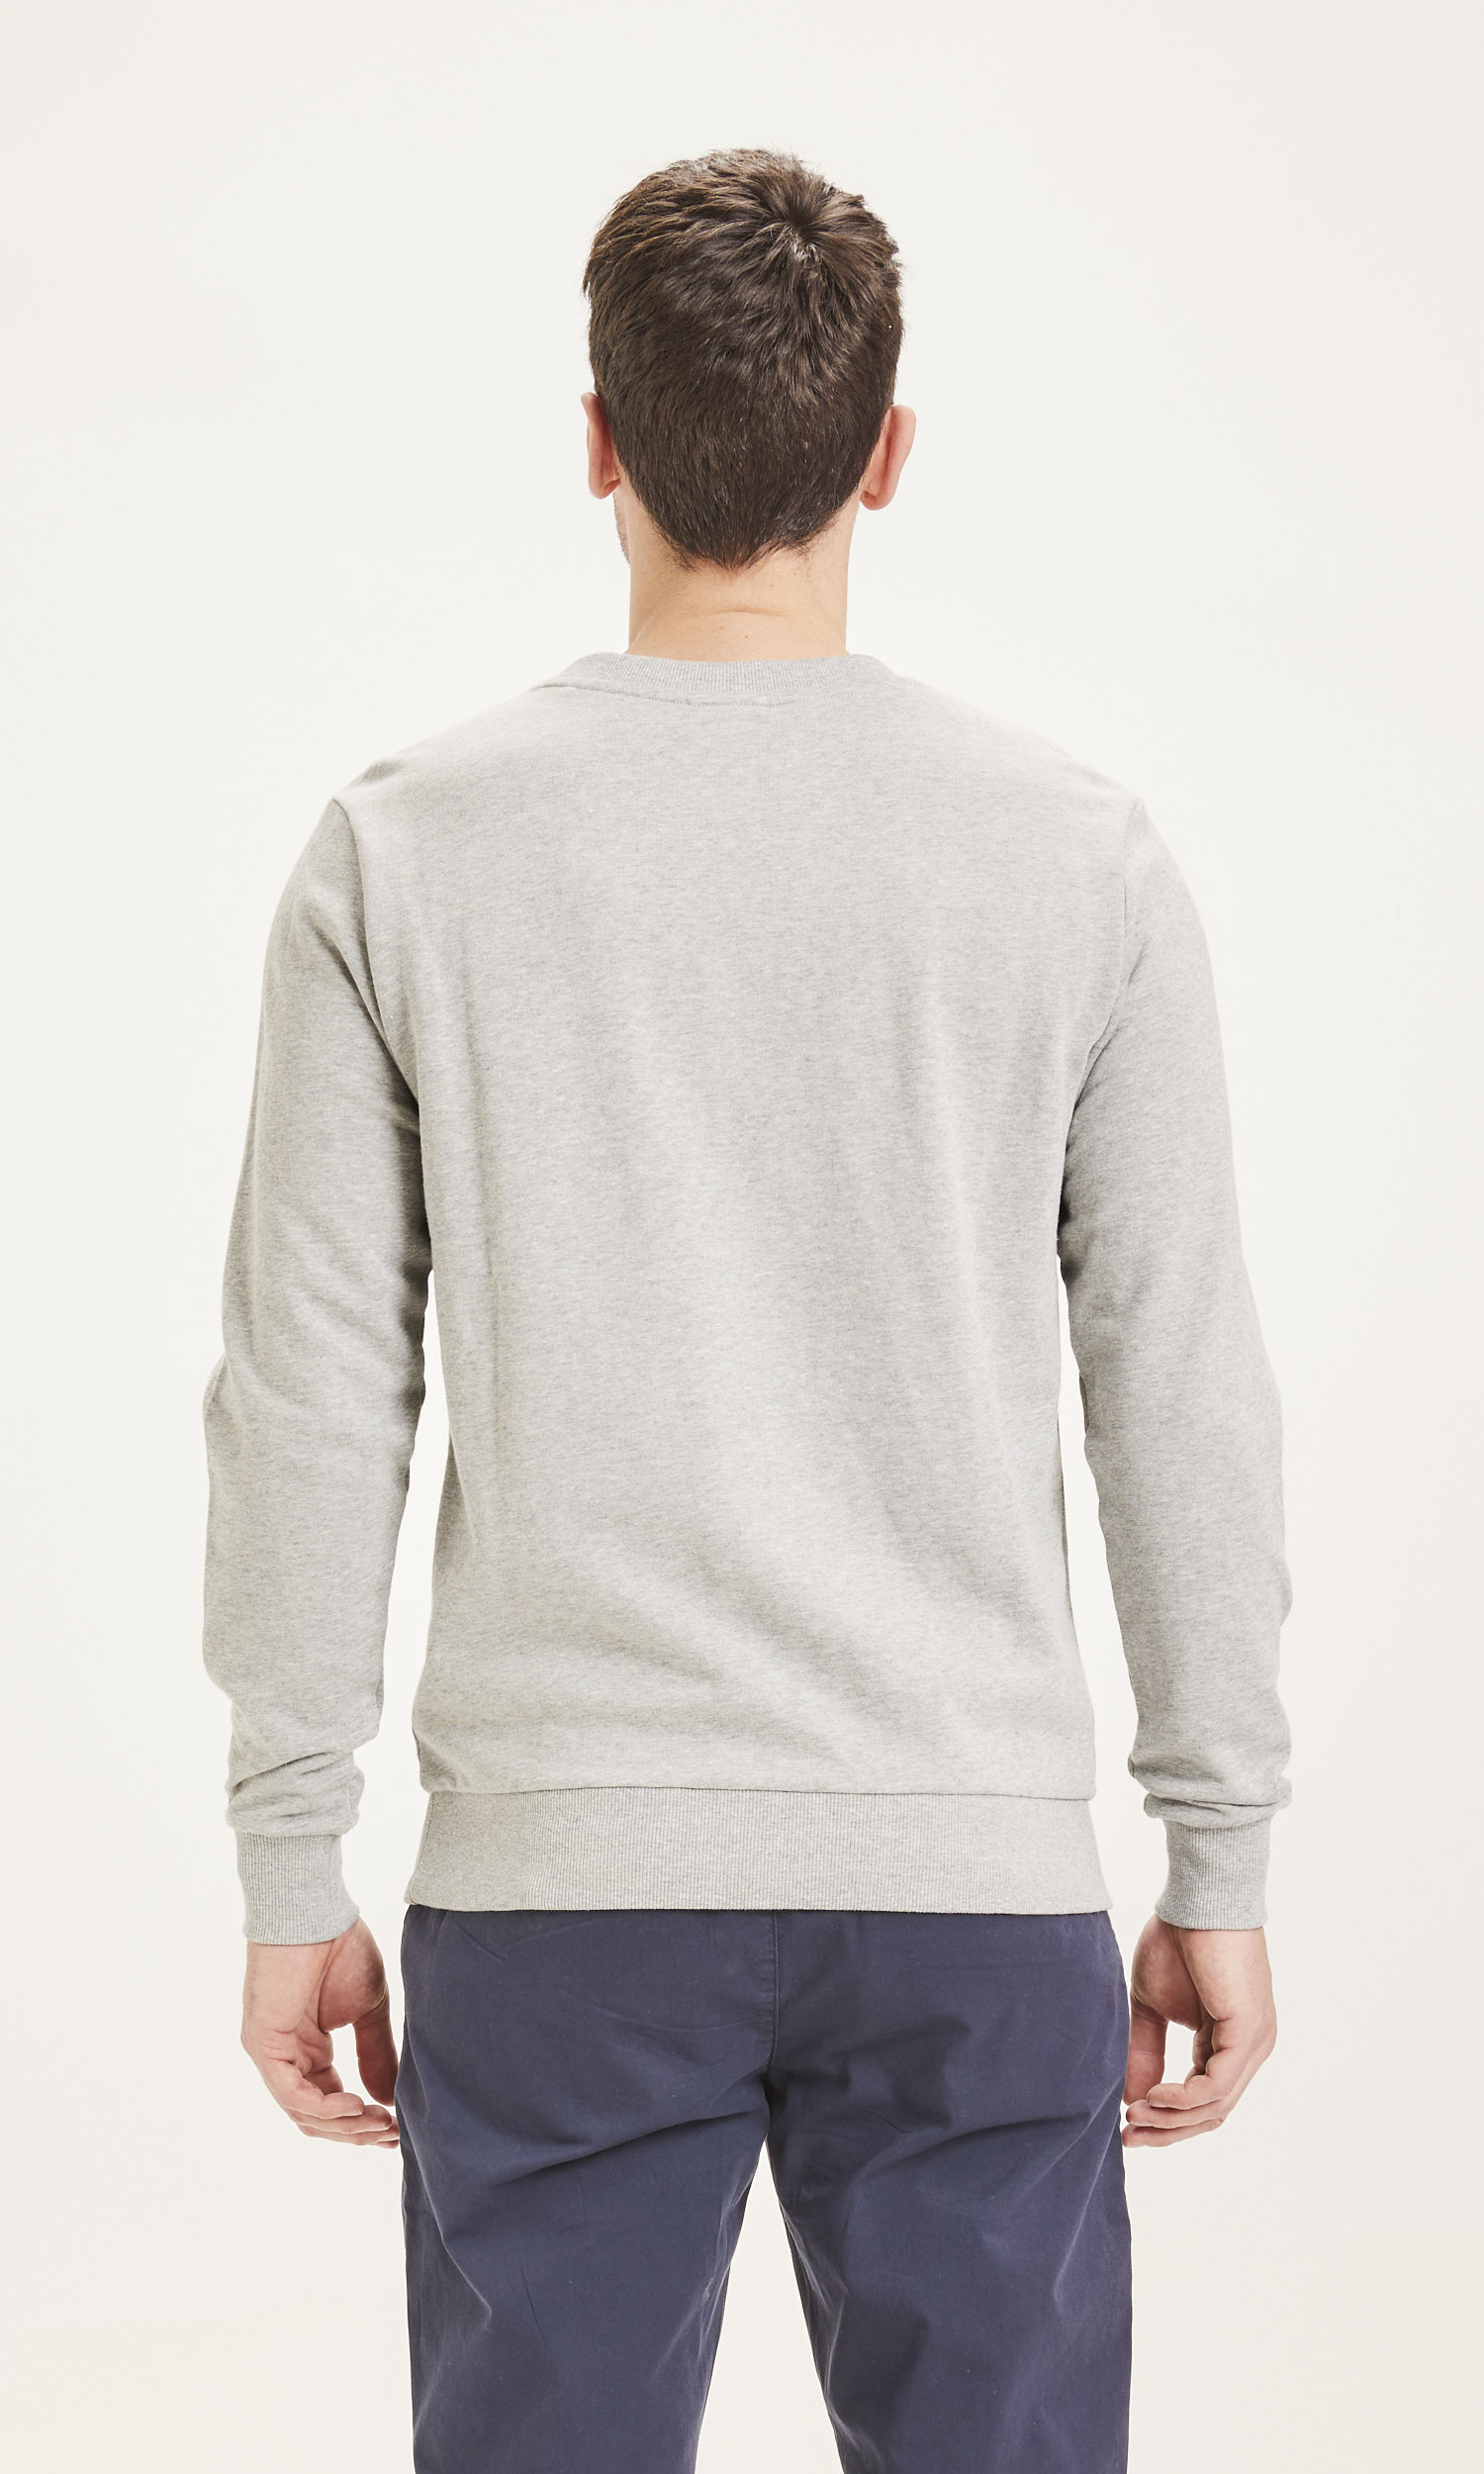  Sweatshirt, Grey Melange, M